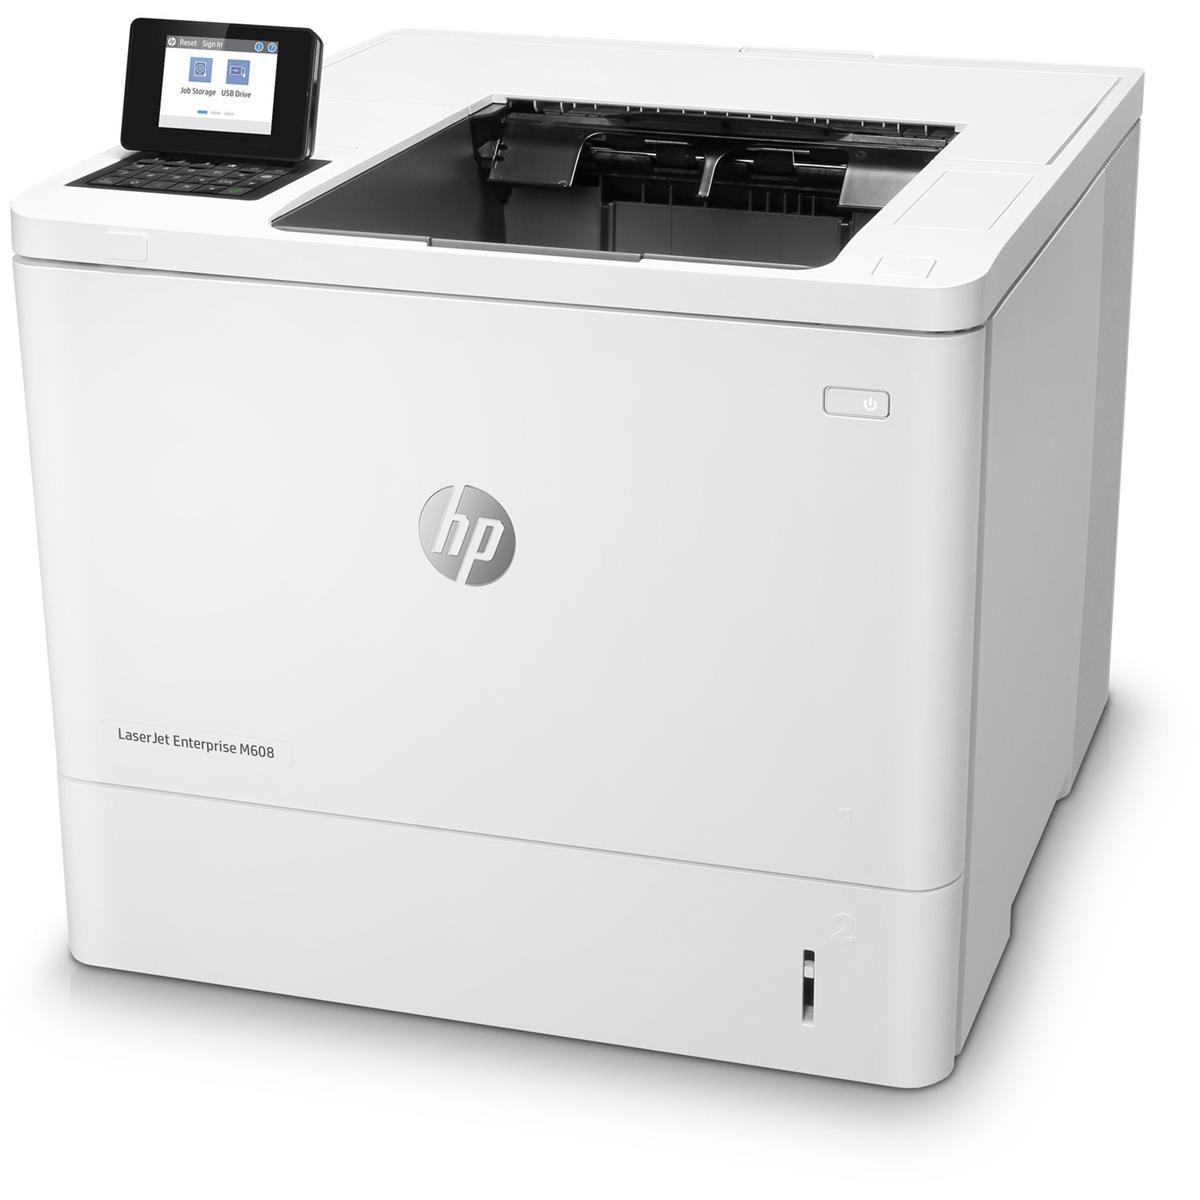 Image of HP LaserJet Enterprise M608n Laser Printer